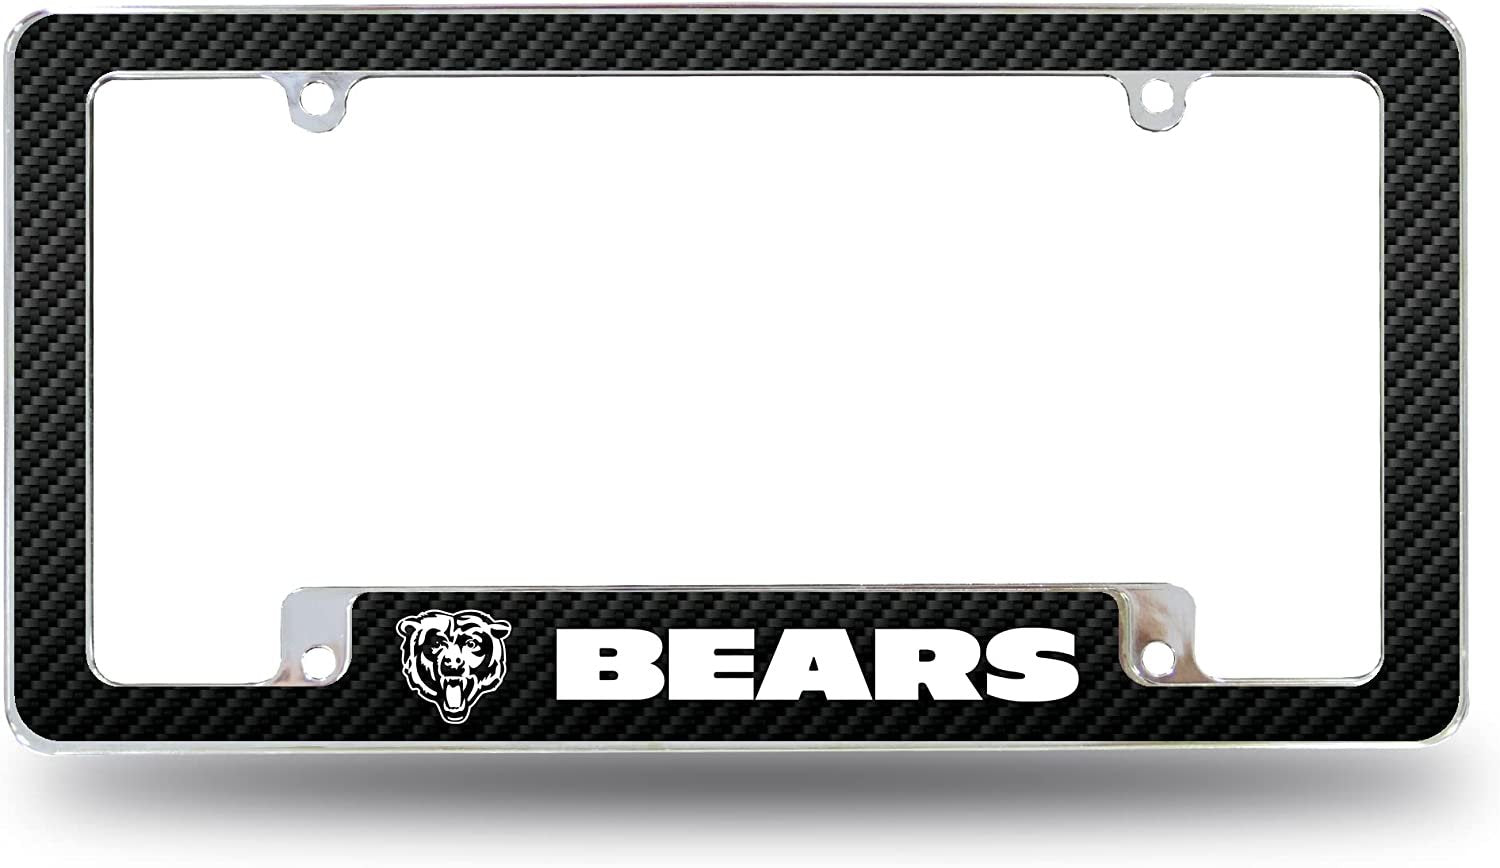 Chicago Bears Metal License Plate Frame Chrome Tag Cover Carbon Fiber Design 6x12 Inch